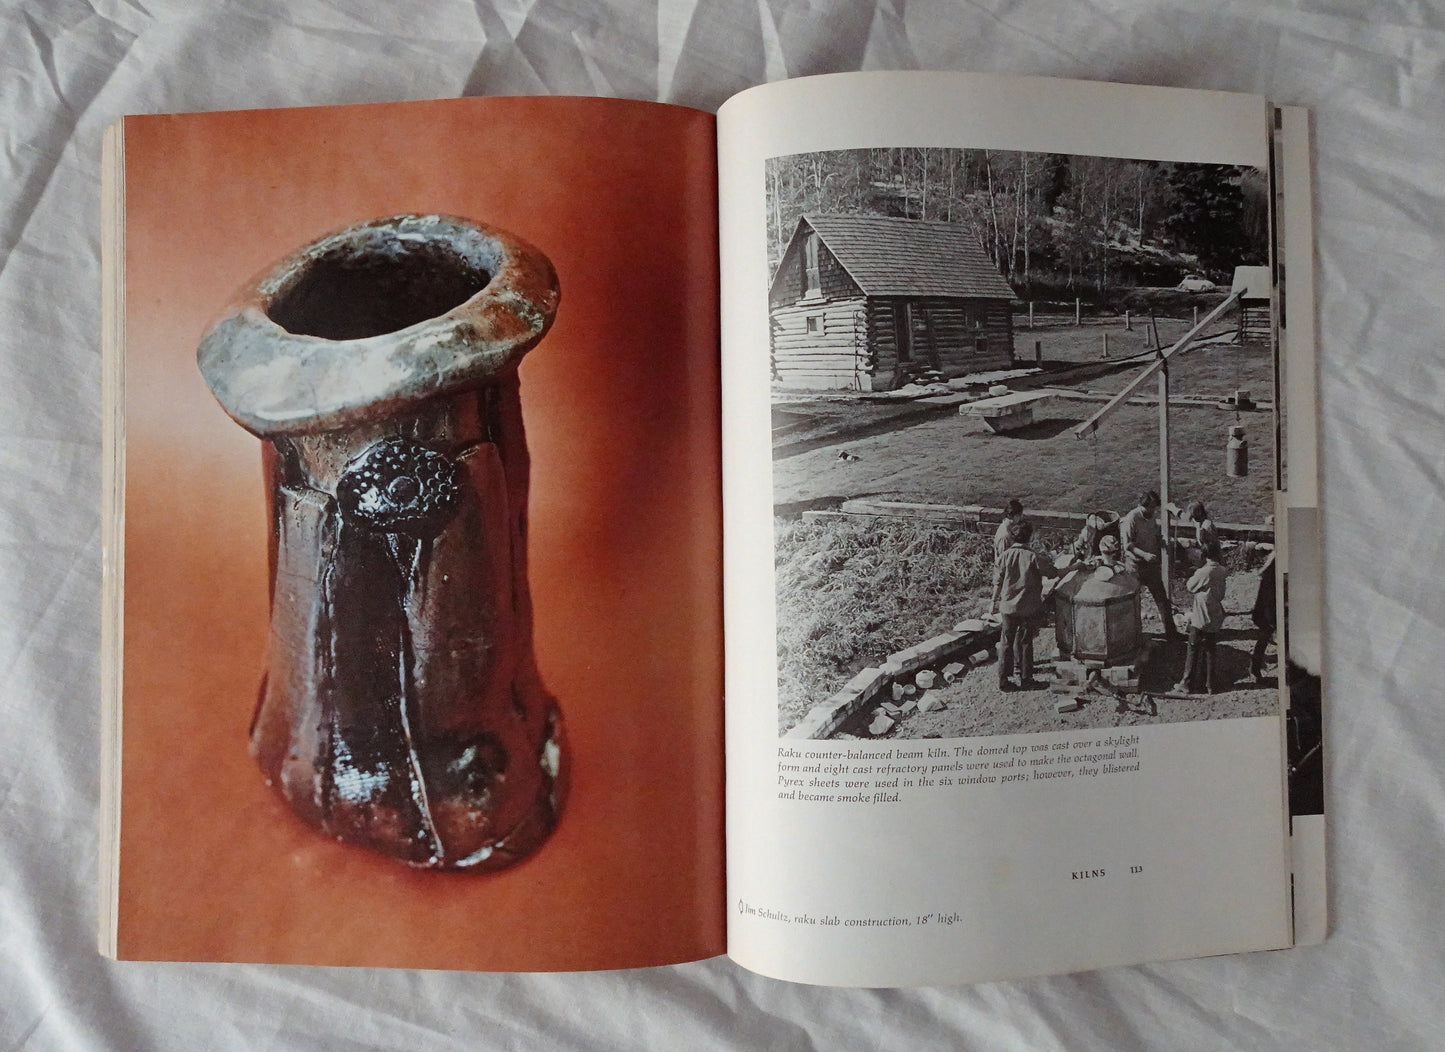 Raku Pottery by Robert Piepenburg